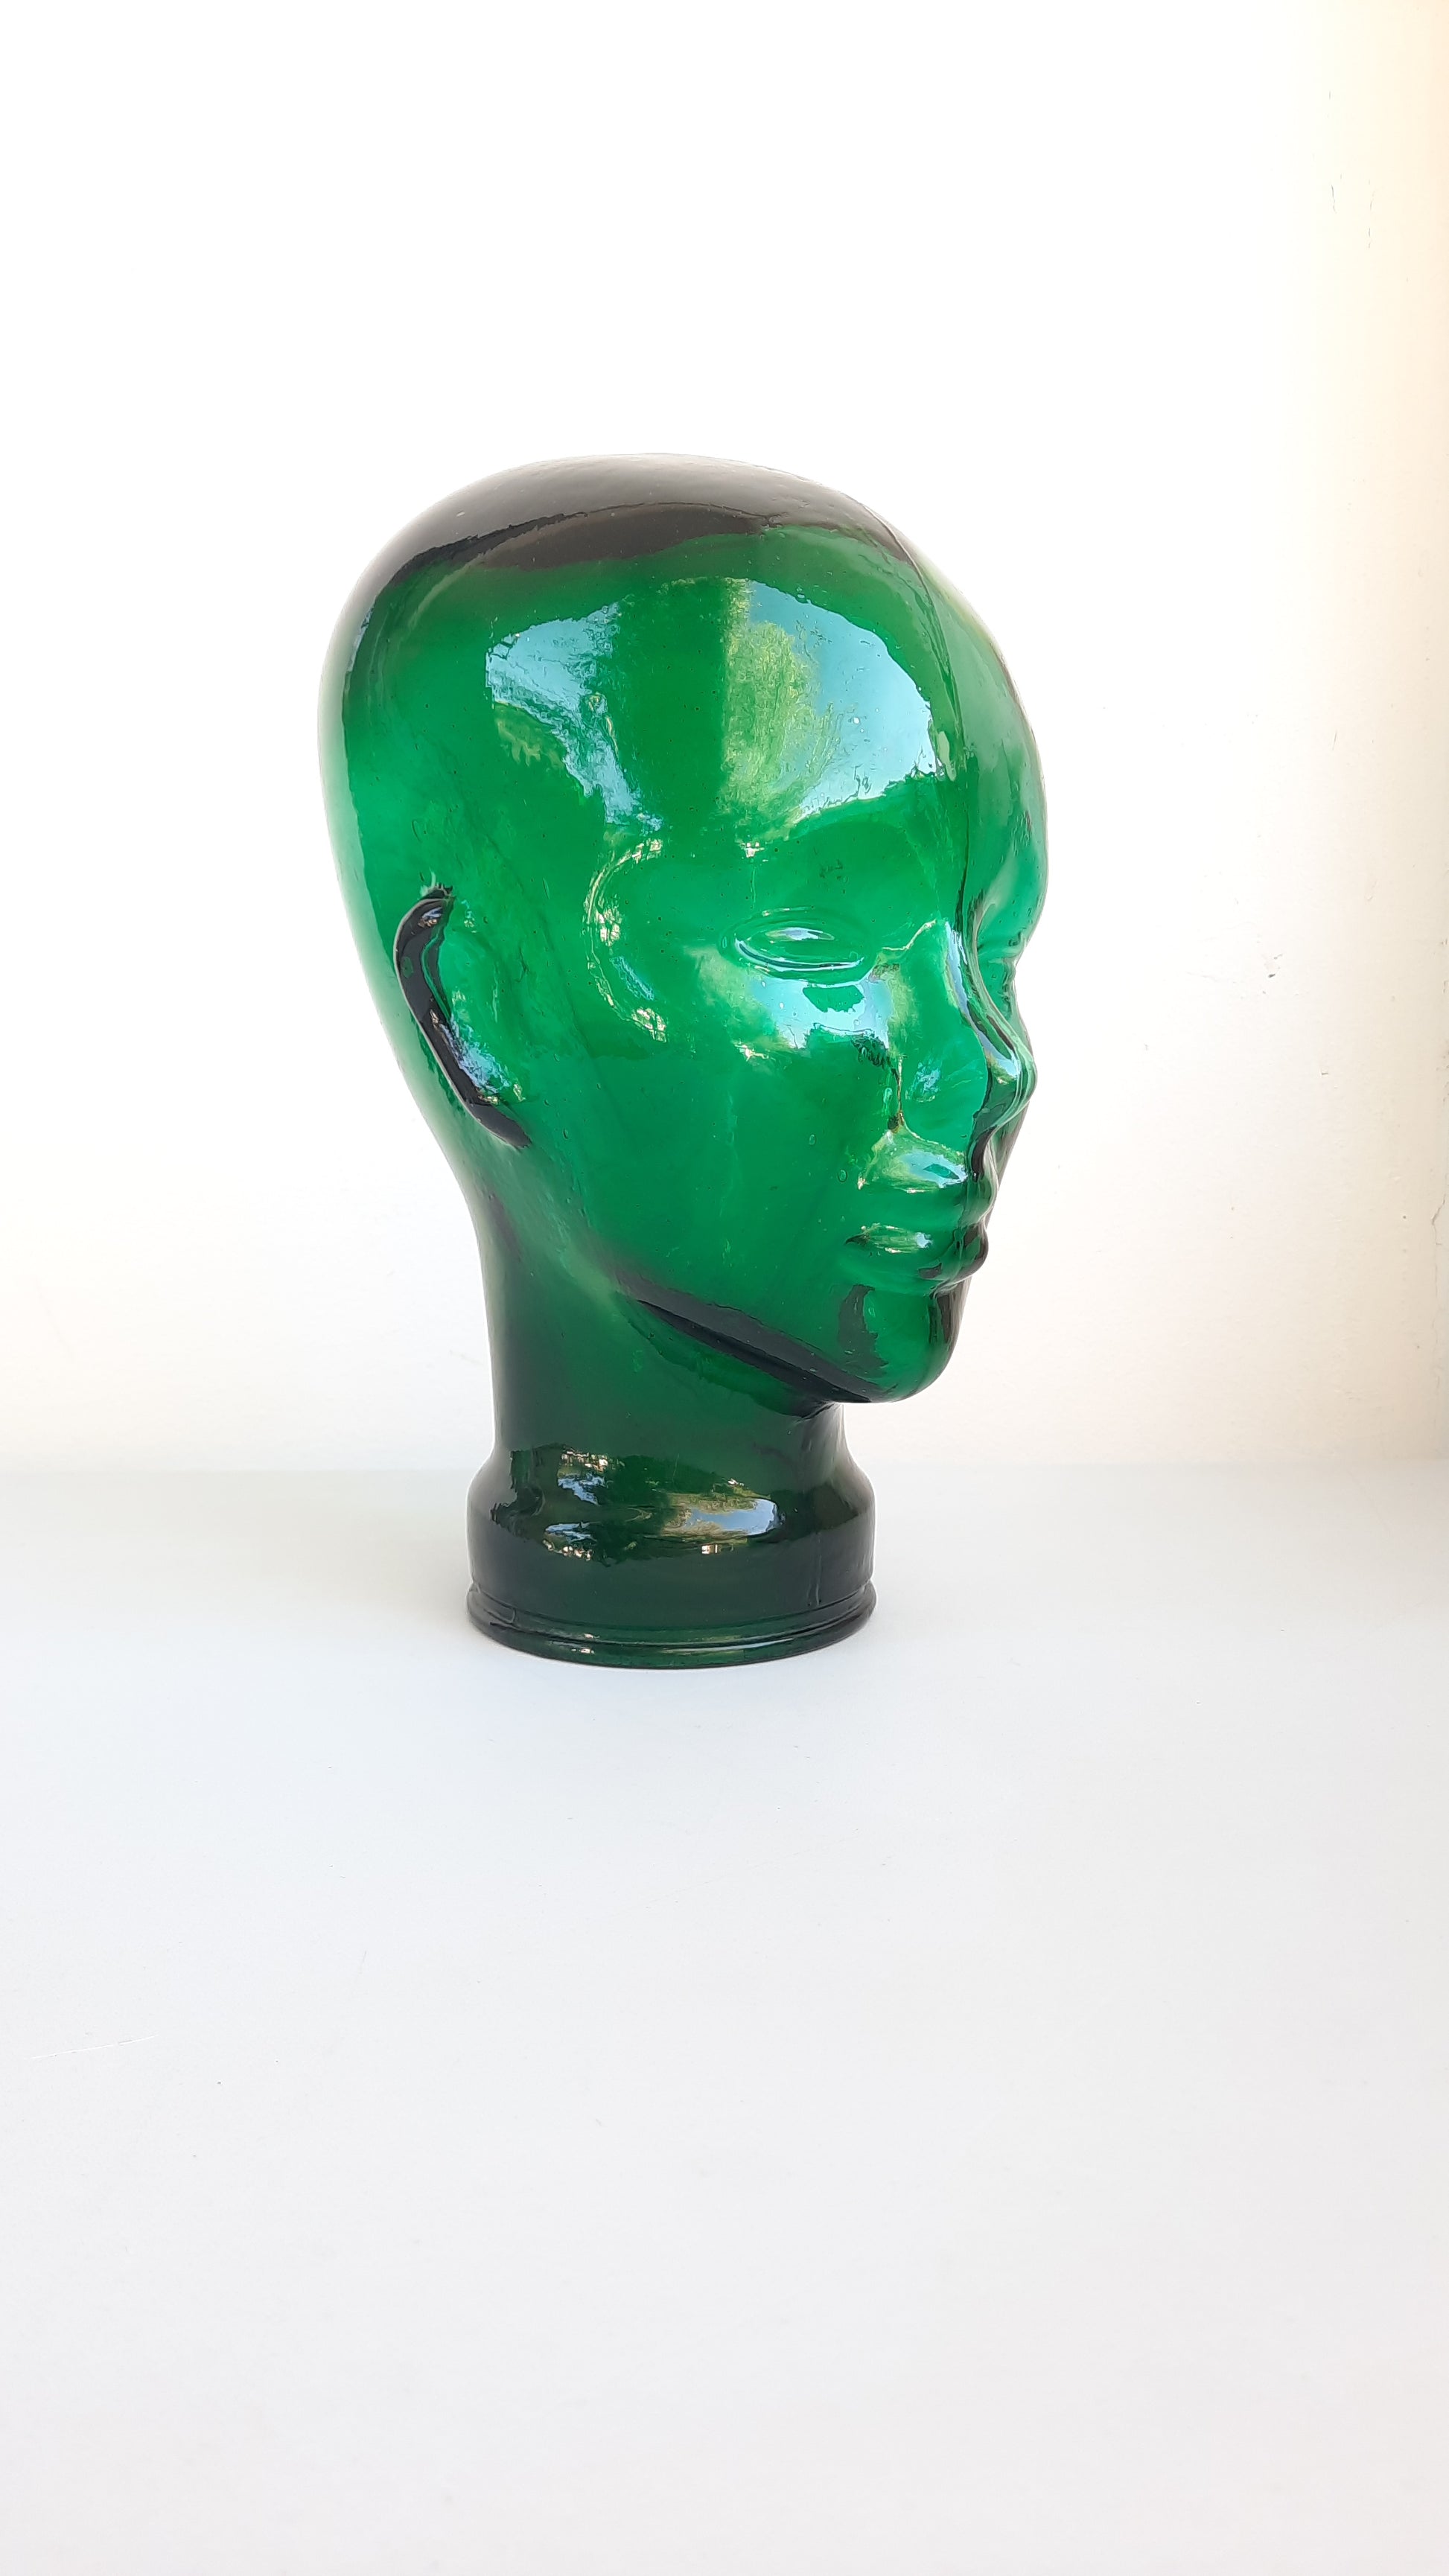 Vintage Glass Mannequin Head, 1970s Green Glass dress form head hat